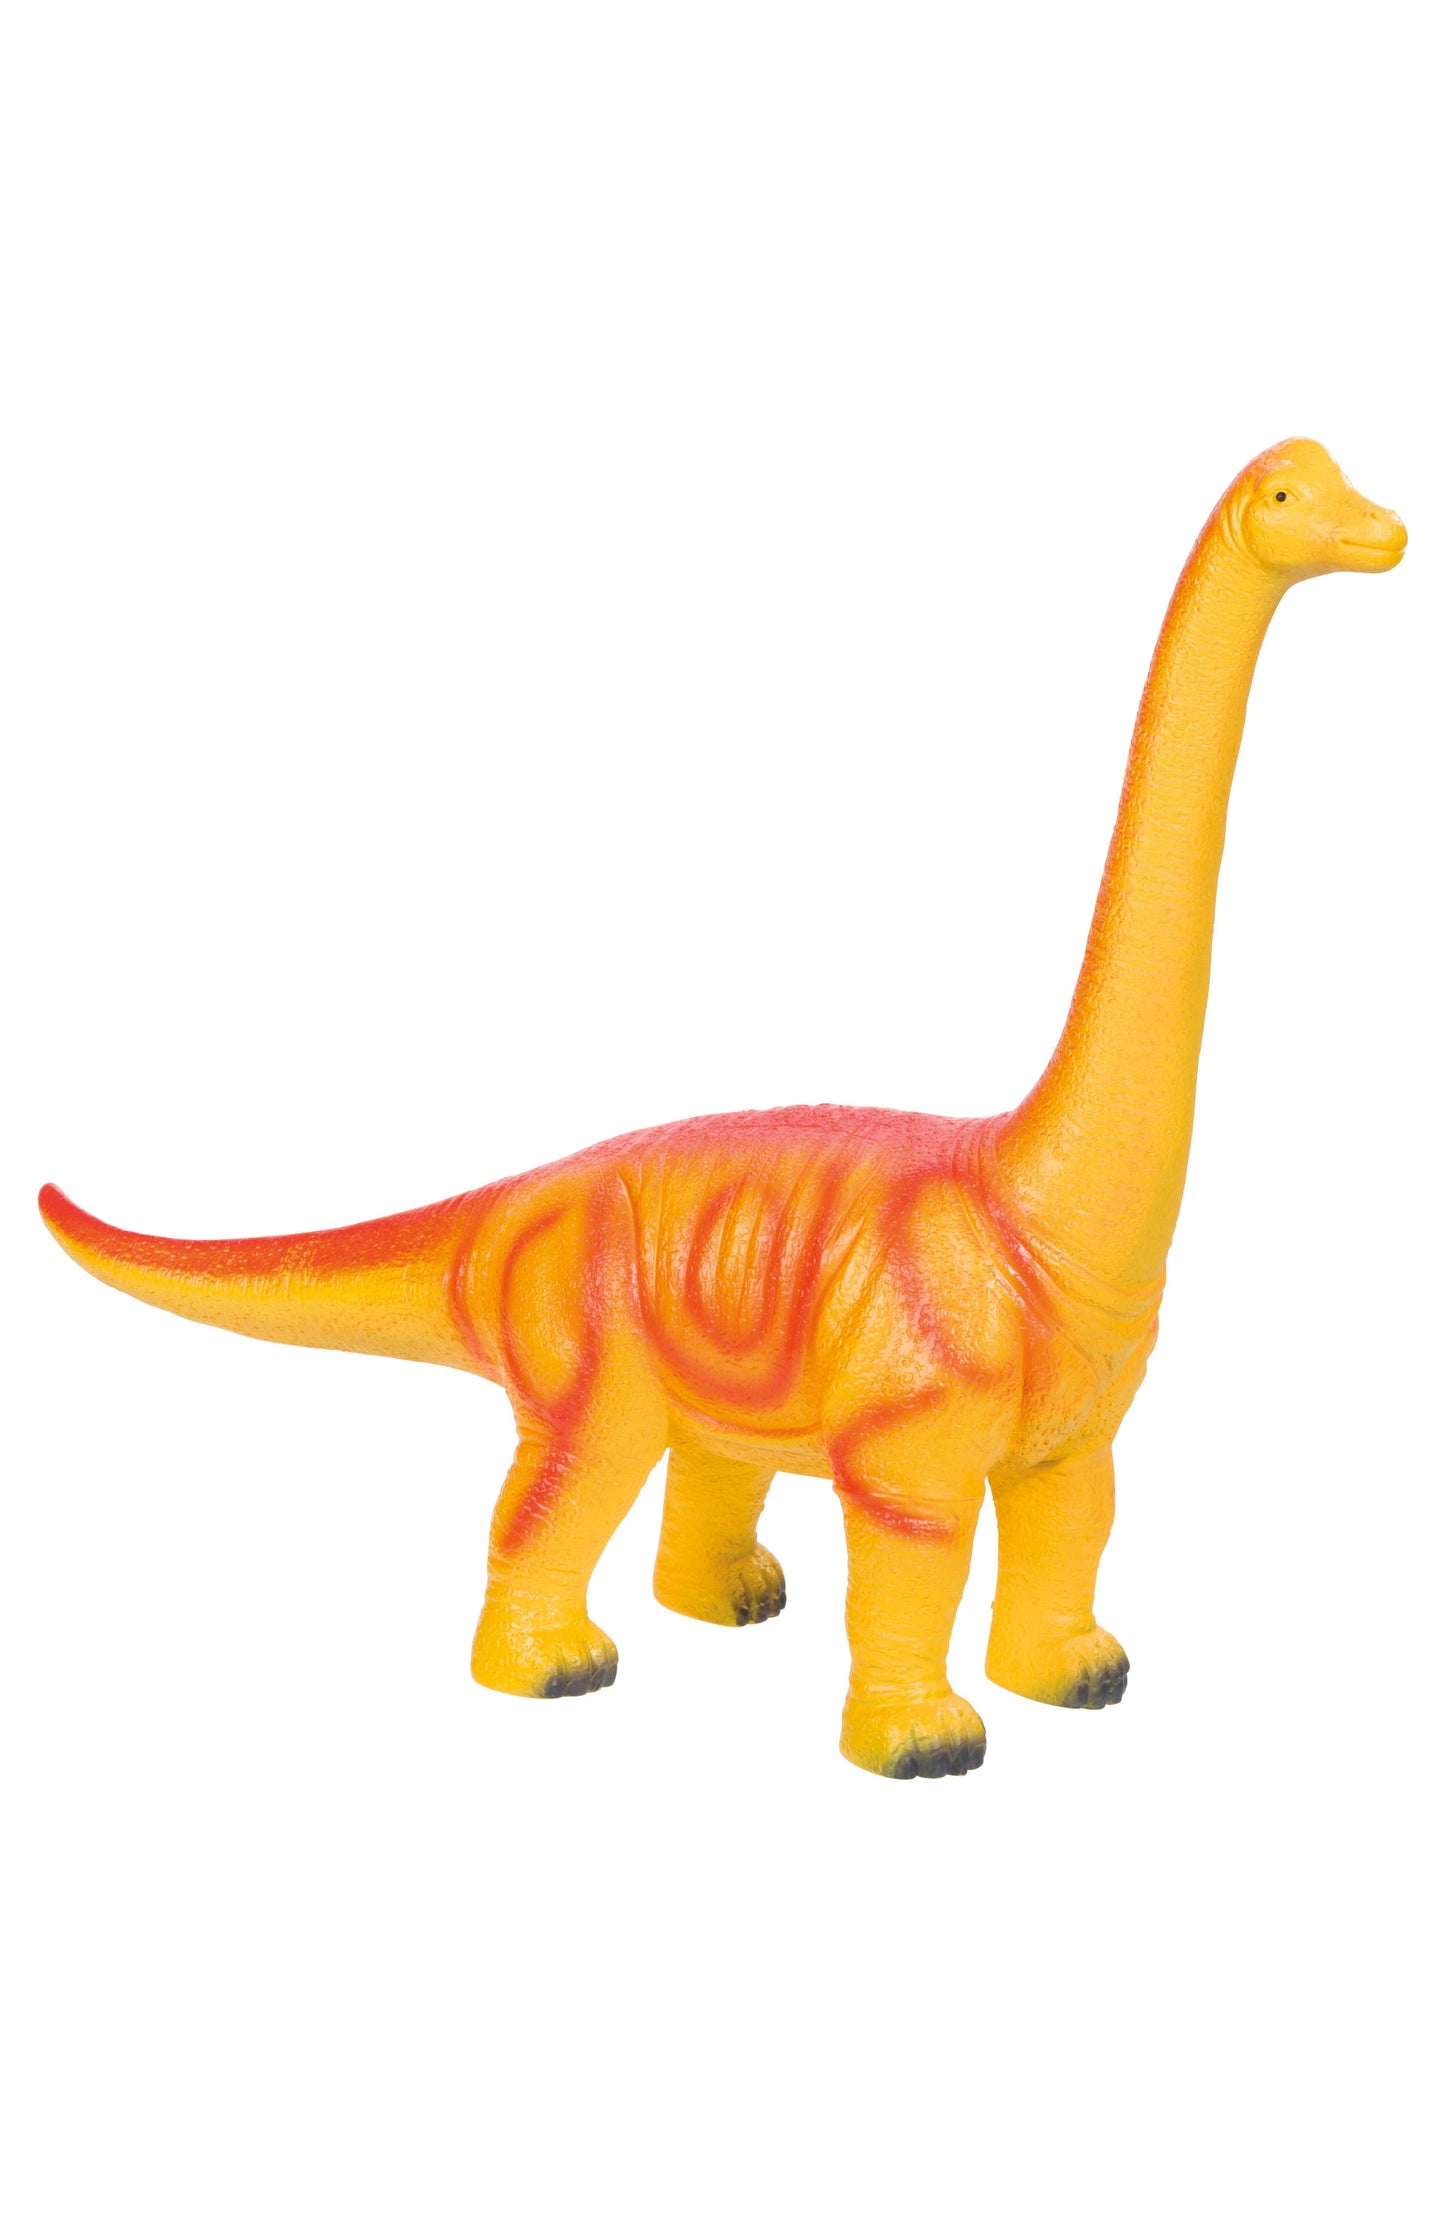 Epic Dinosaur Toy